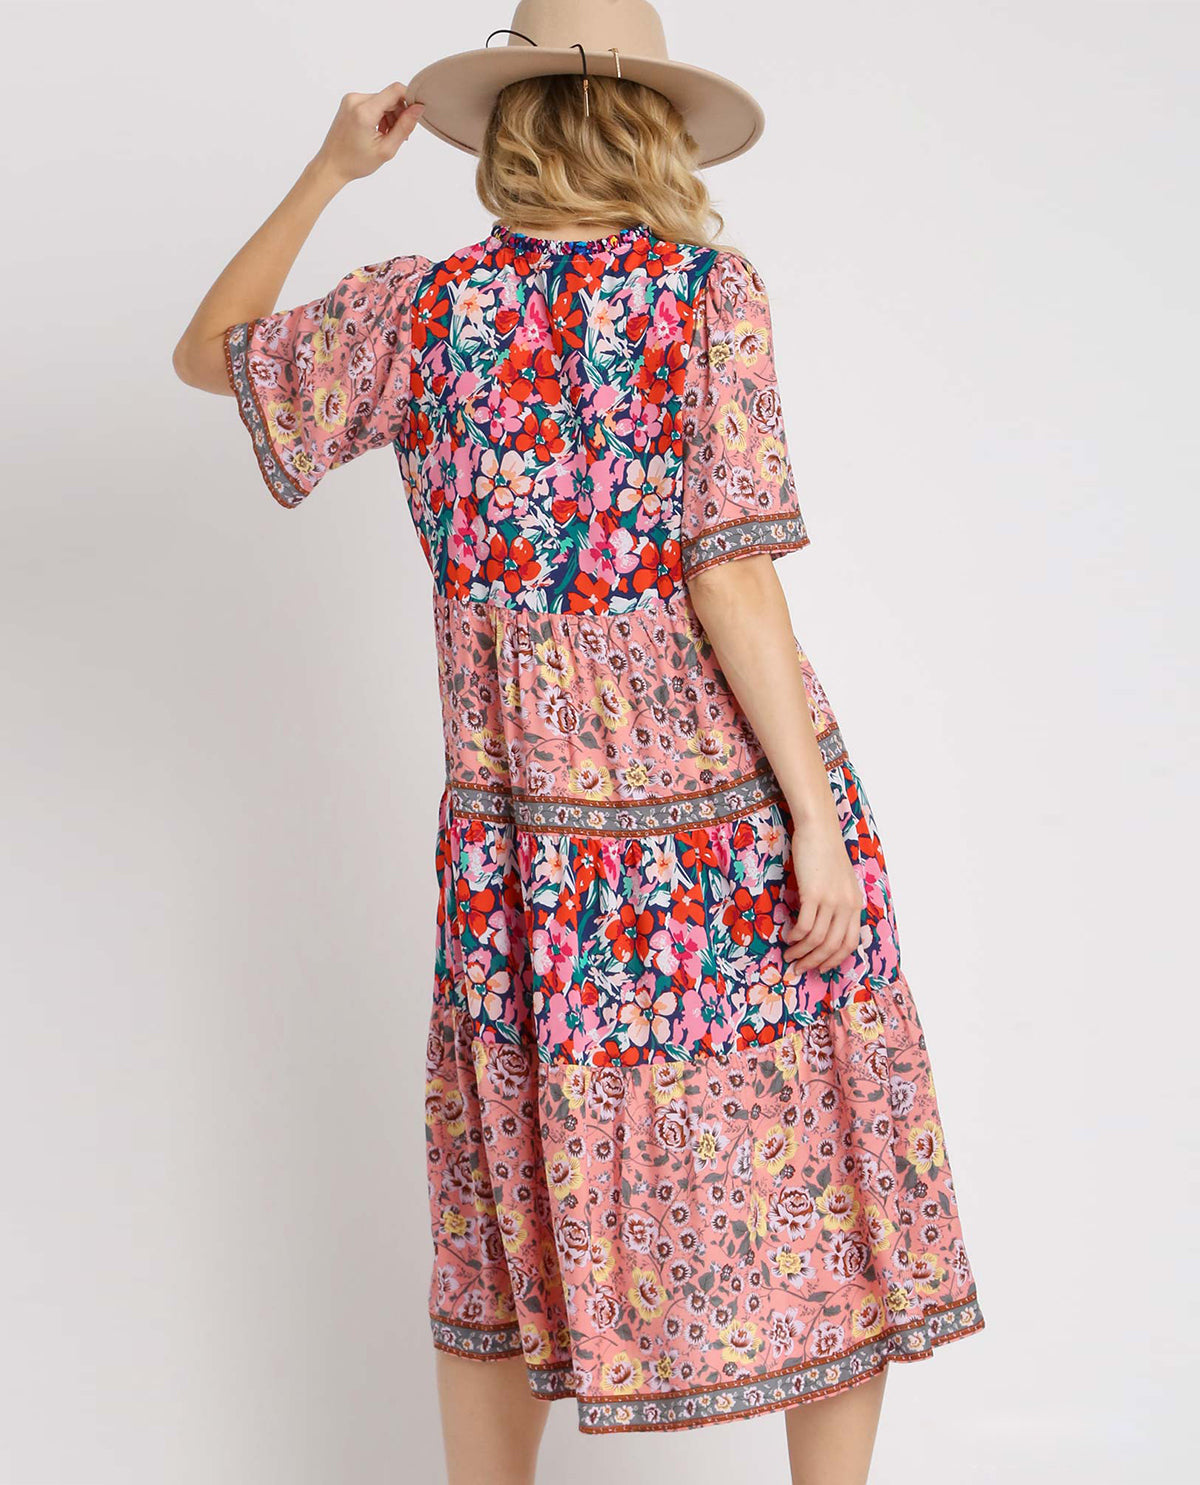 Short Sleeve Mixed Floral Print Maxi Dress